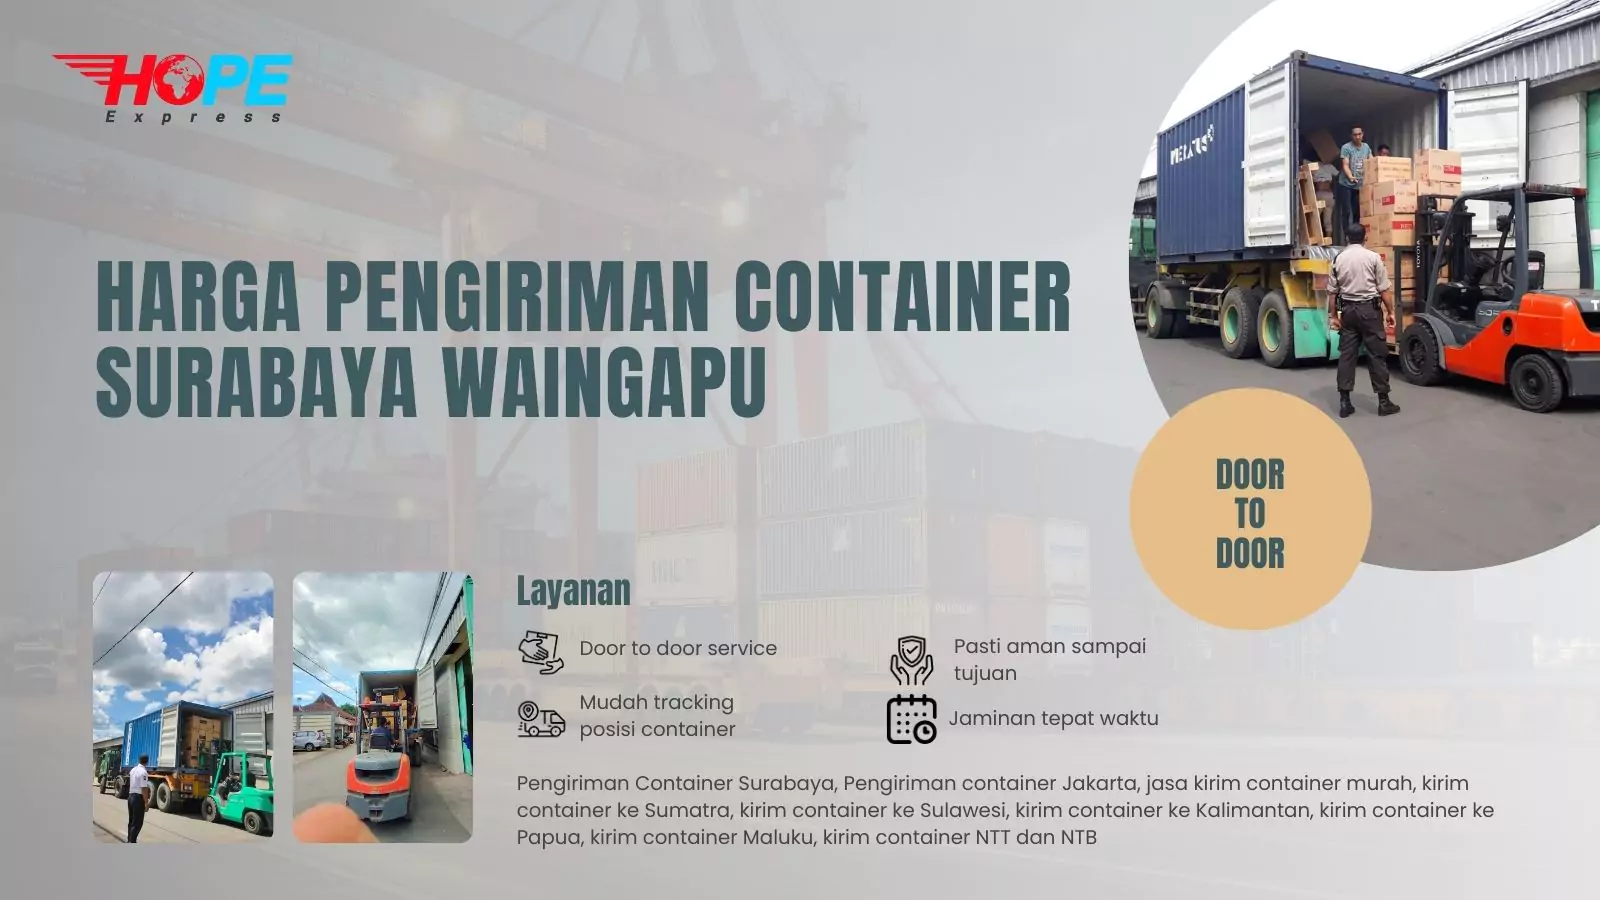 Harga Pengiriman Container Surabaya Waingapu